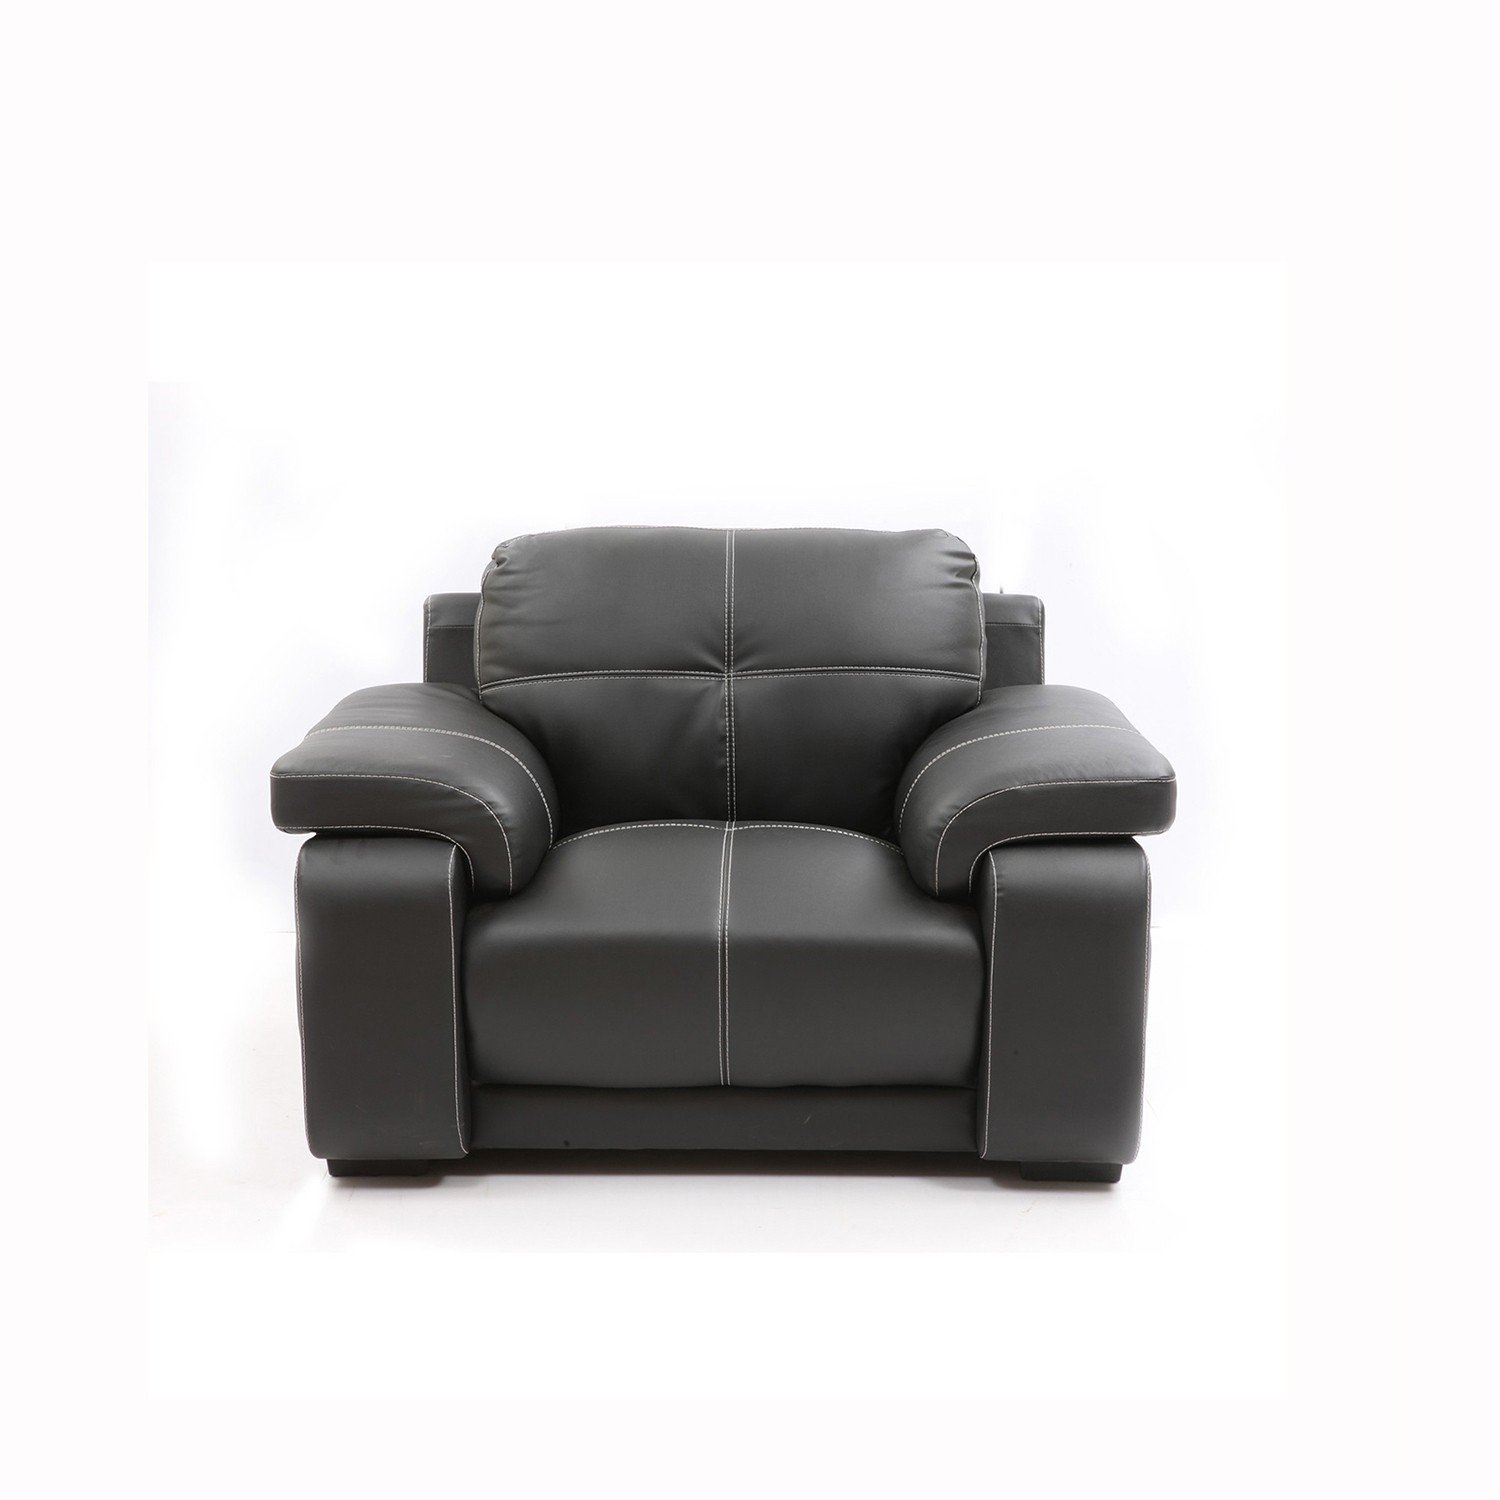 EVOK Leather Marina Sectional Single Seater Sofa (Black)